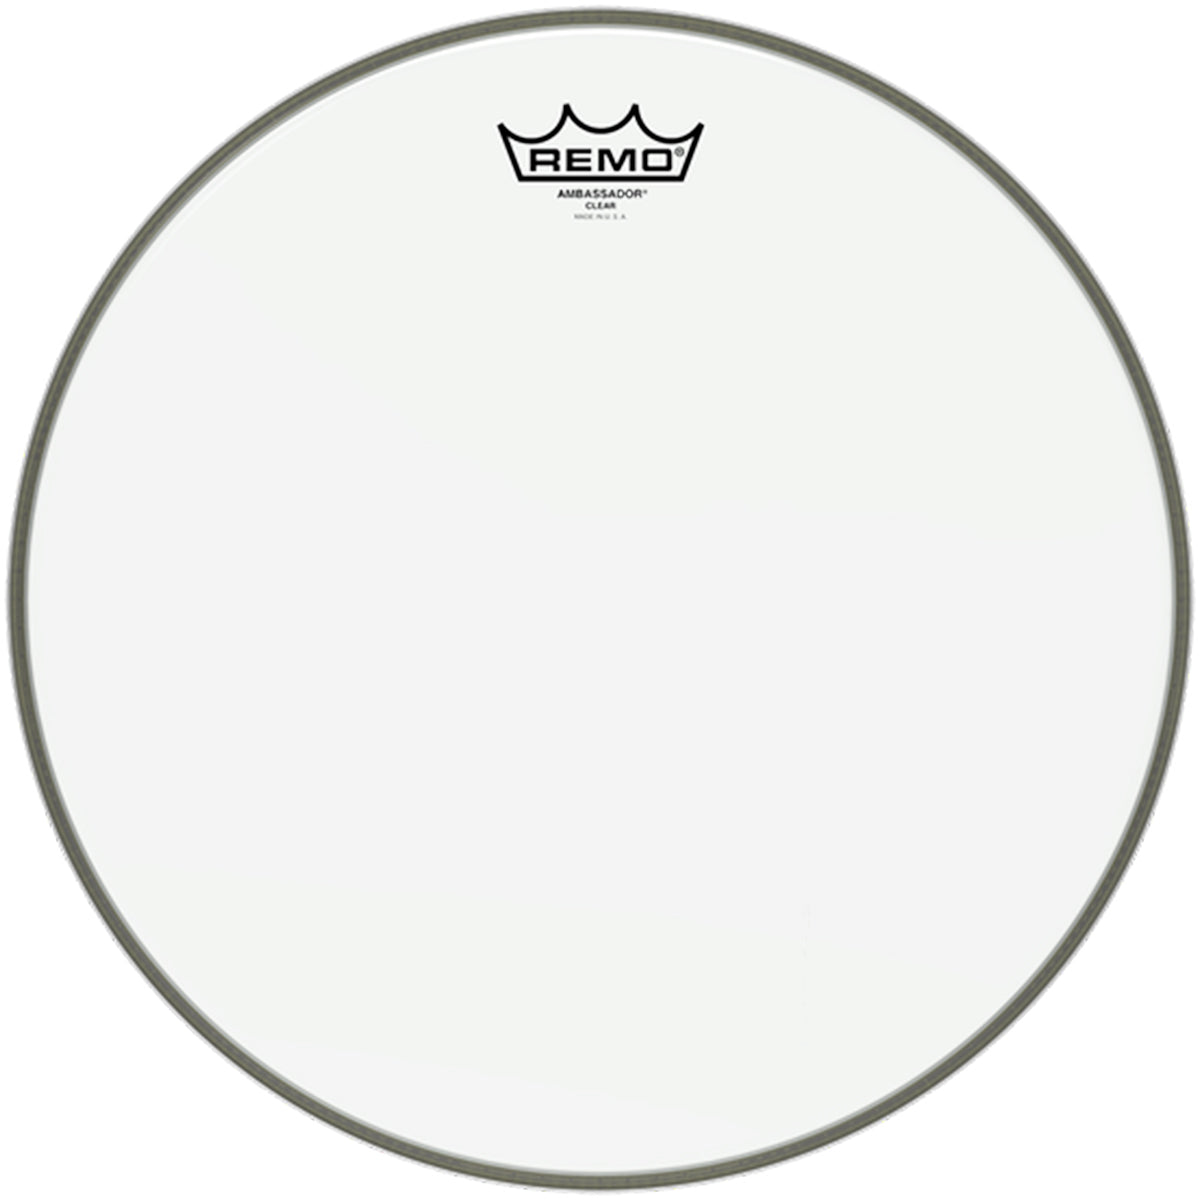 Remo BA-0314-00 Ambassador Drum Head Skin 14 Inch Clear